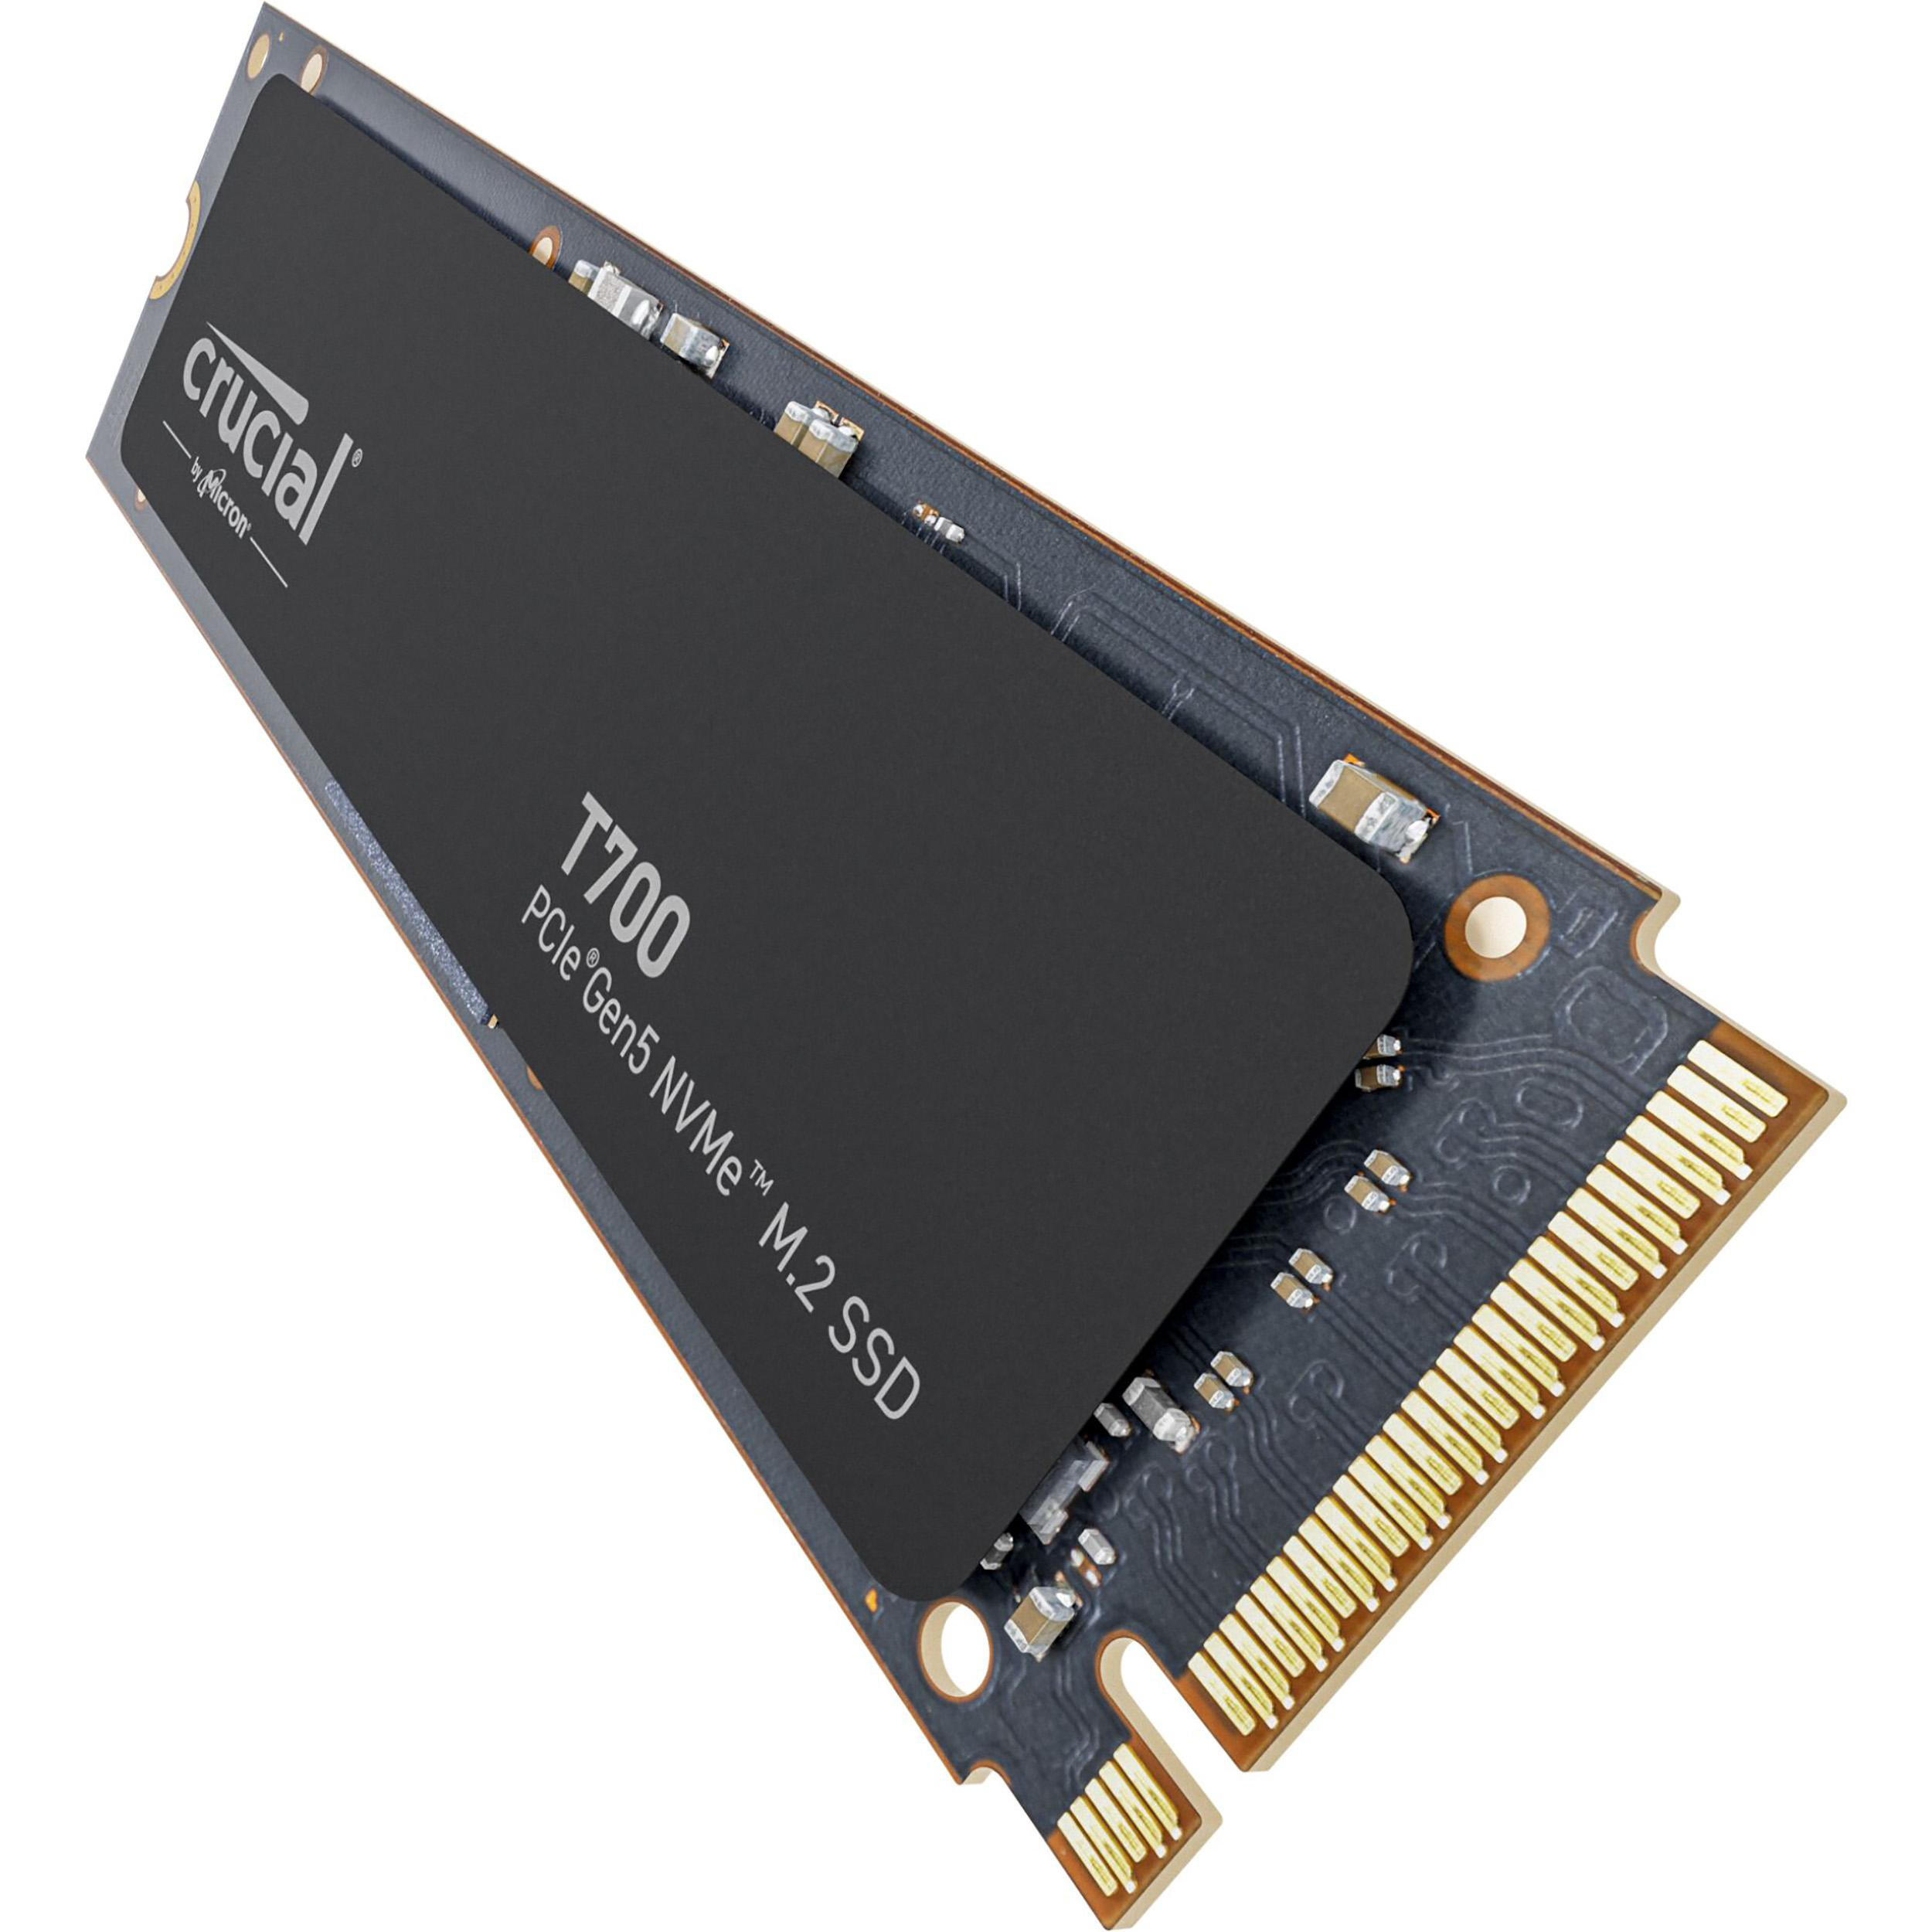 CRUCIAL T700 PCIe Gen5 NVMe SSD M.2, 1 TB intern SSD